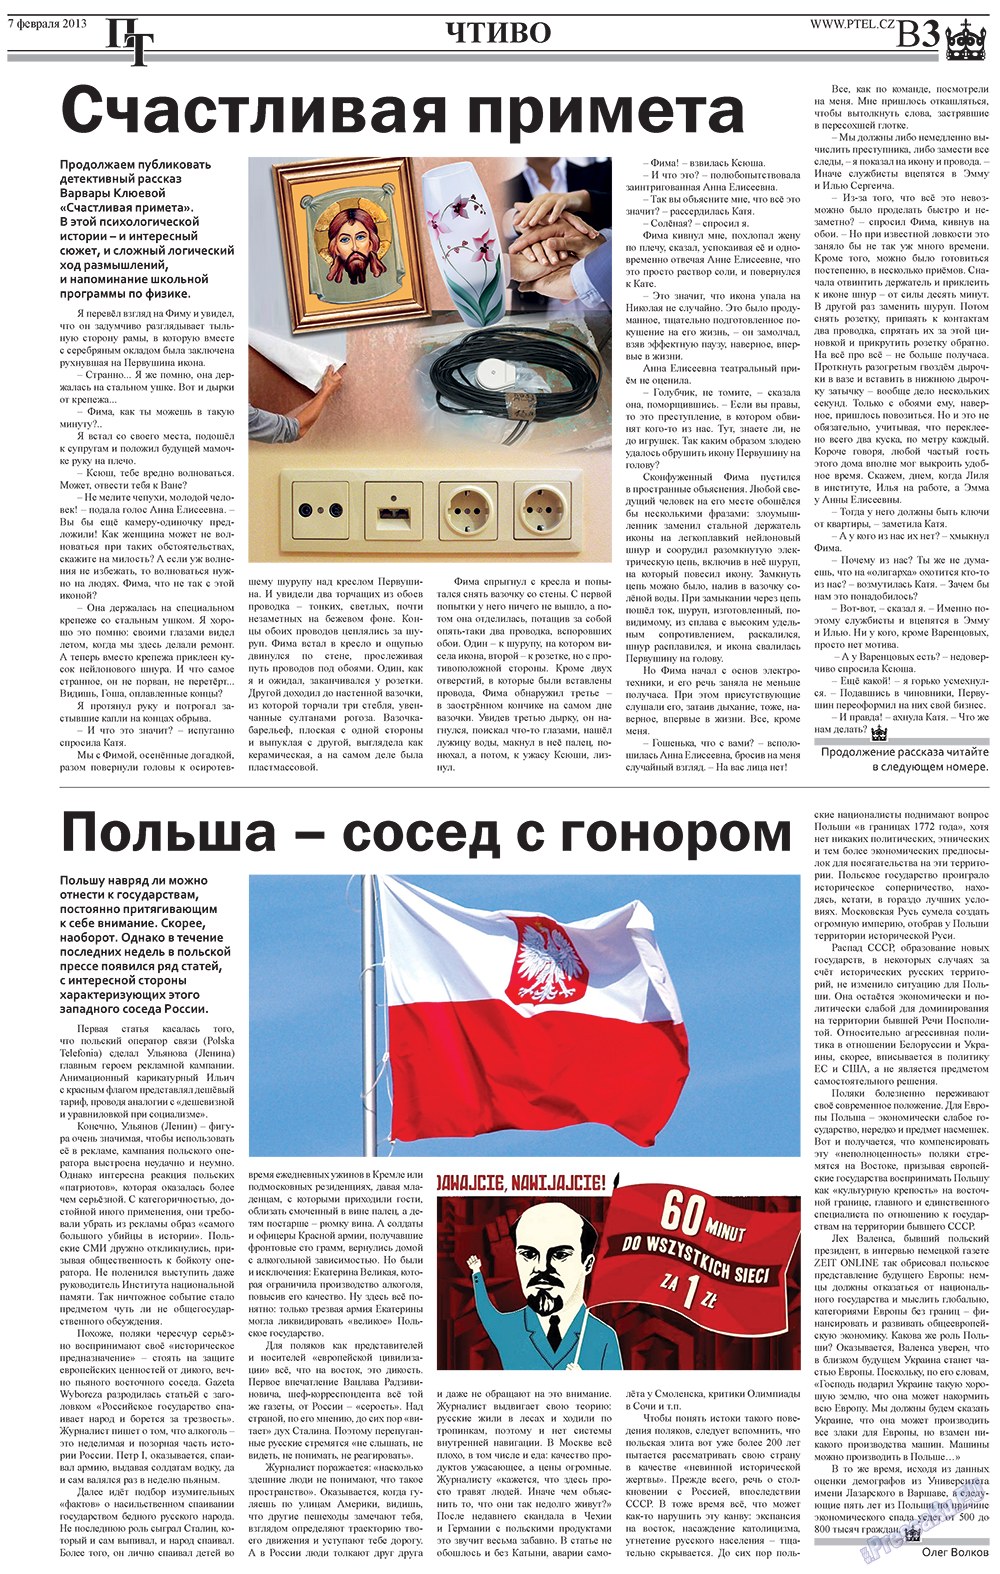 Пражский телеграф, газета. 2013 №5 стр.11